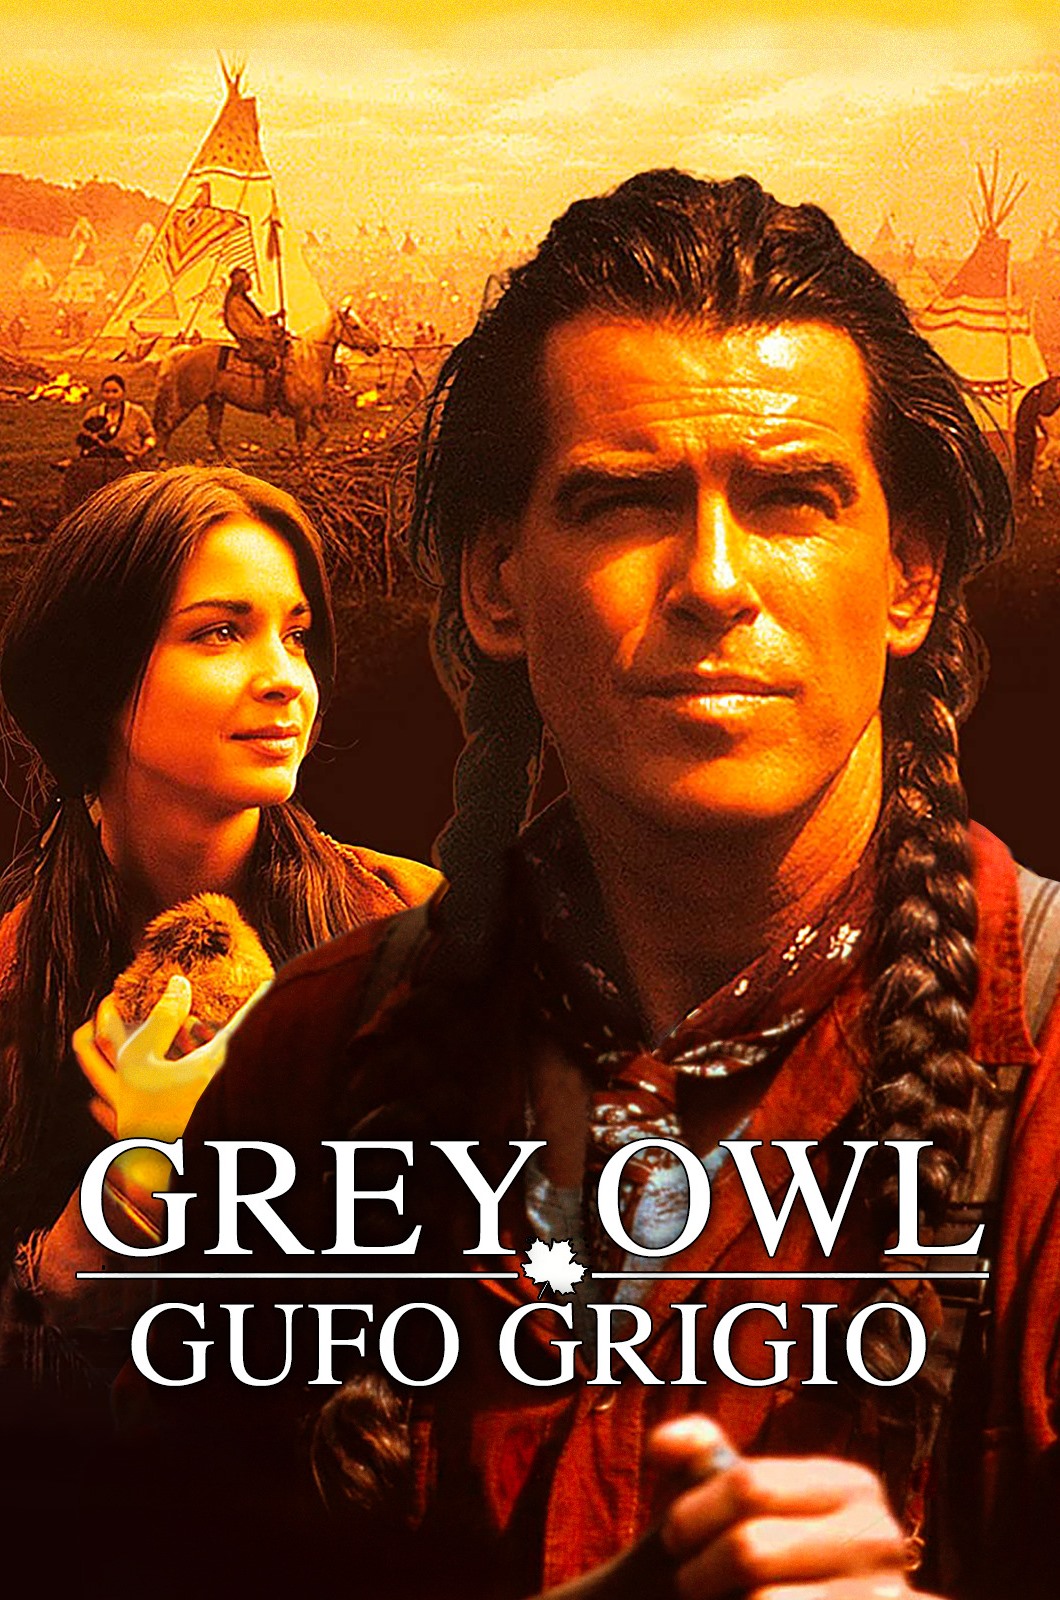 Grey Owl – Gufo grigio [HD] (1999)